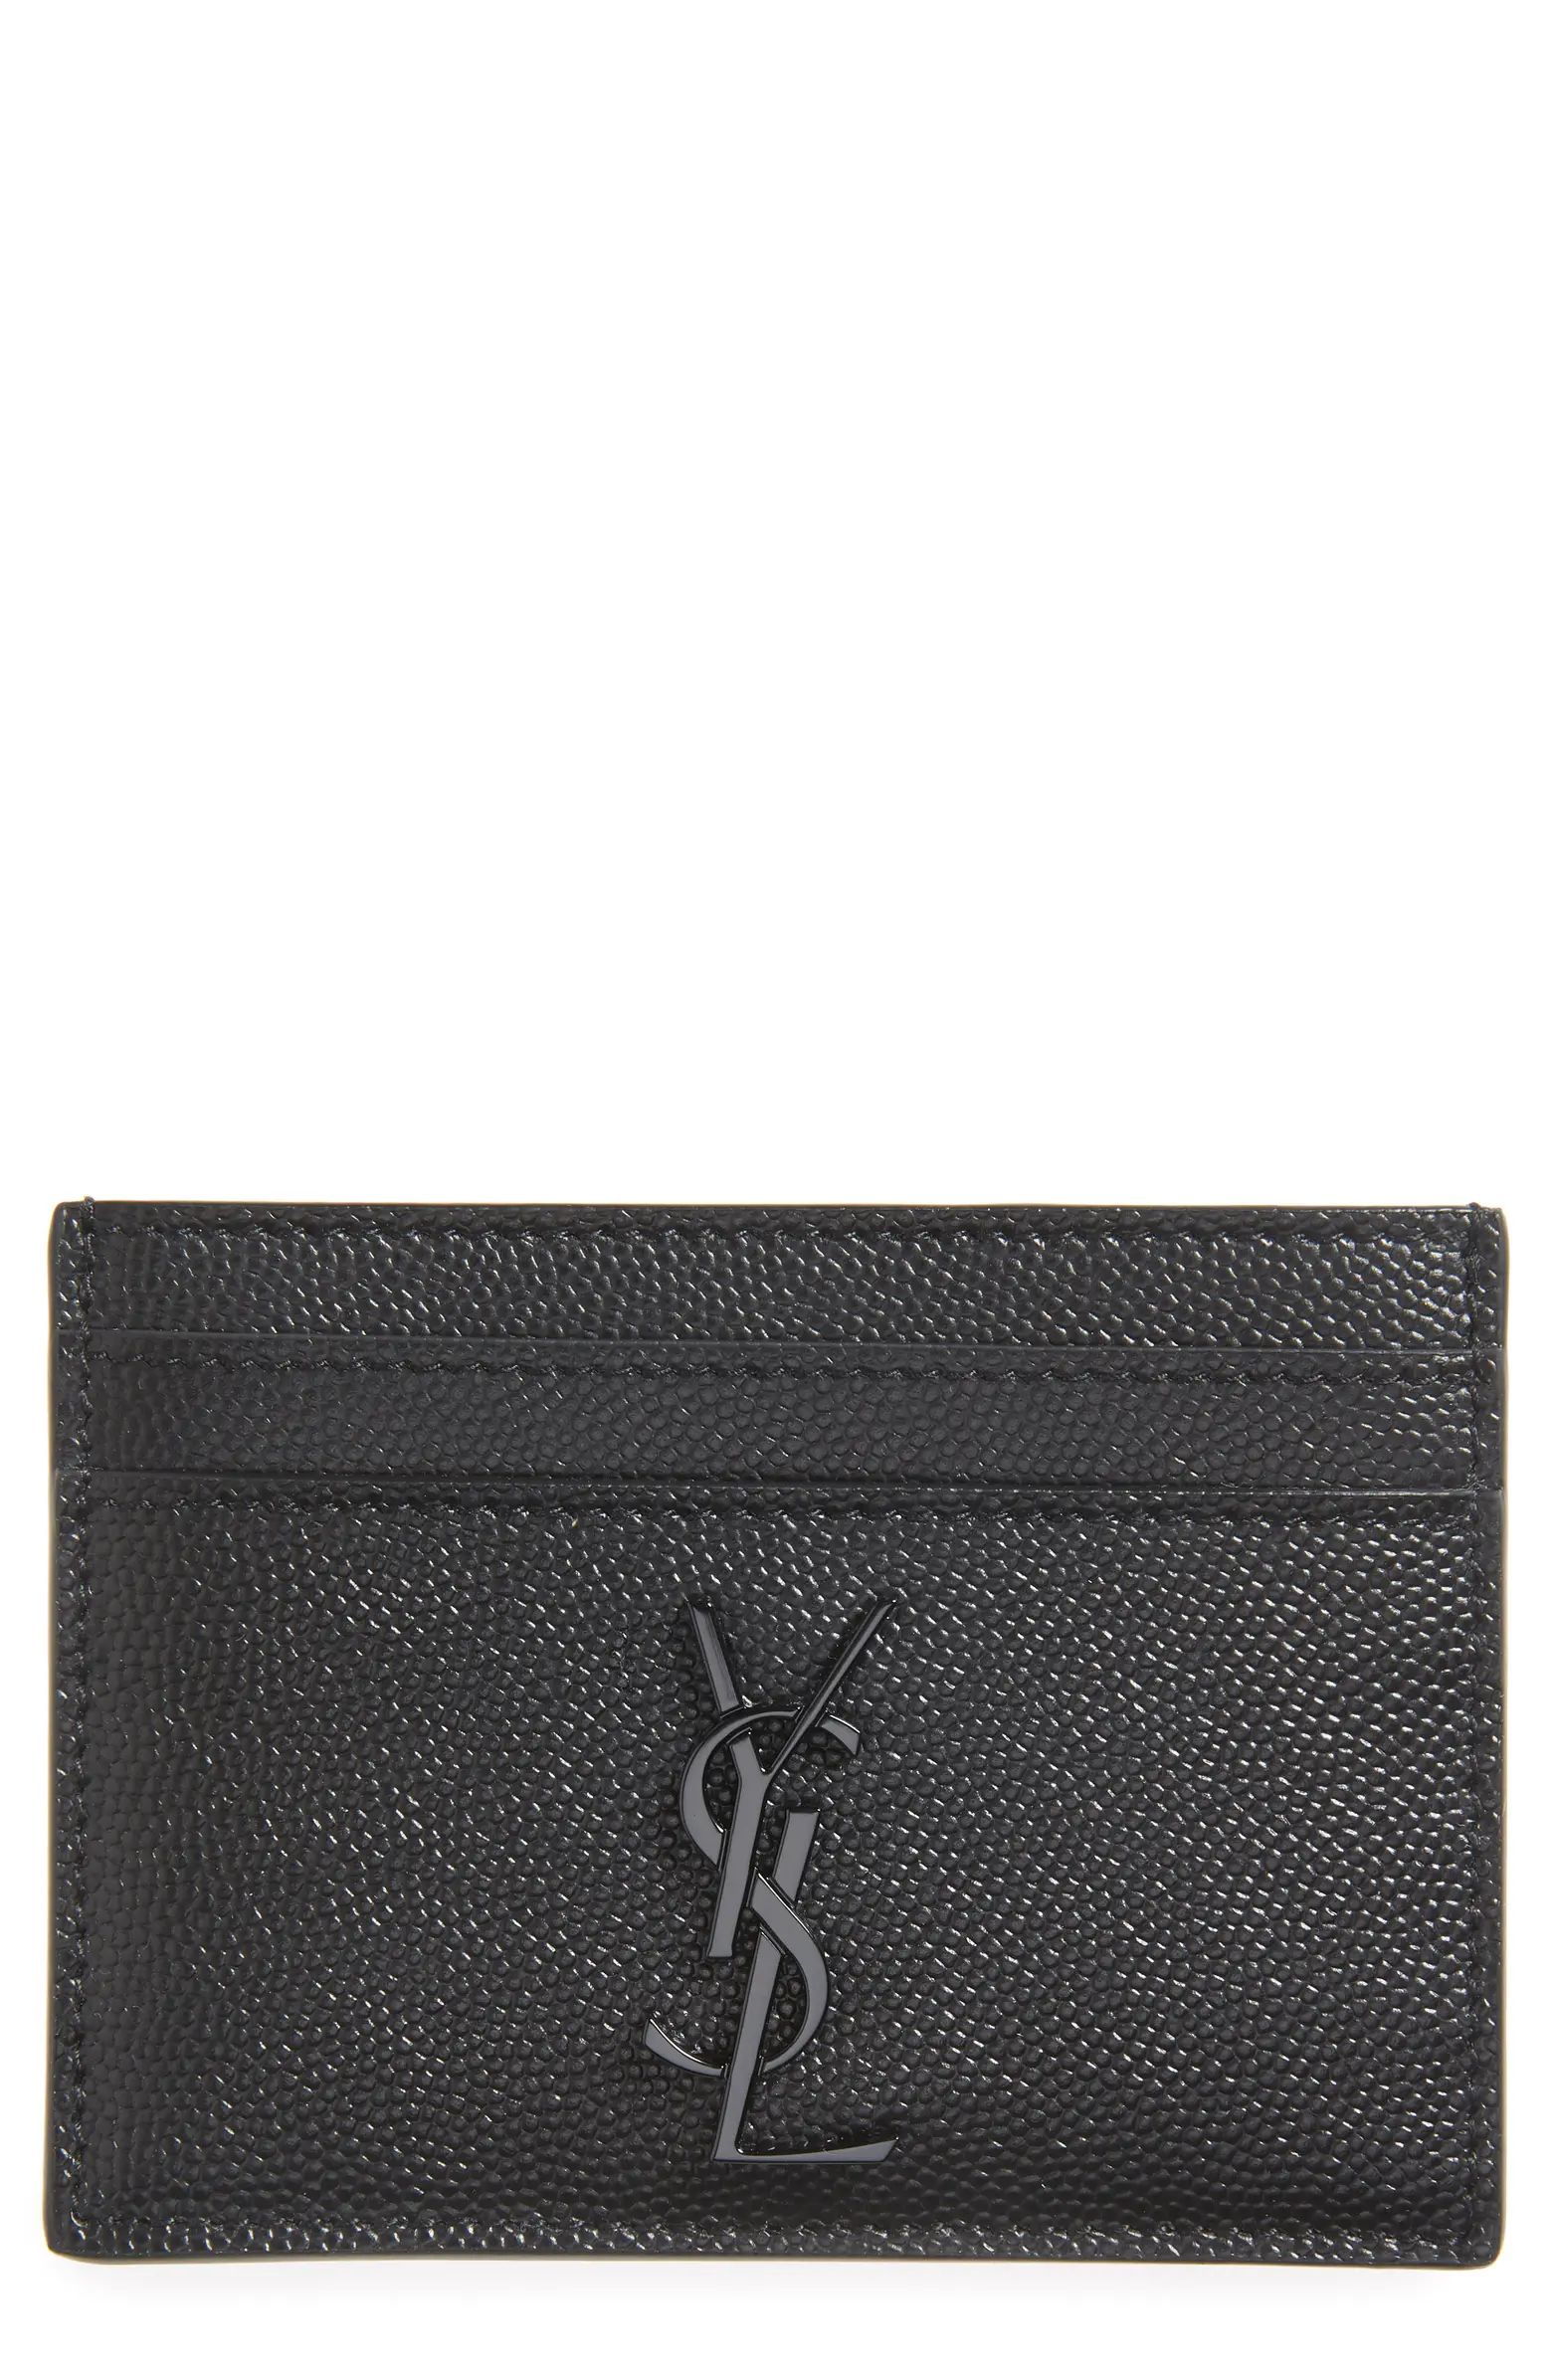 YSL Monogram Textured Leather Card Case | Nordstrom